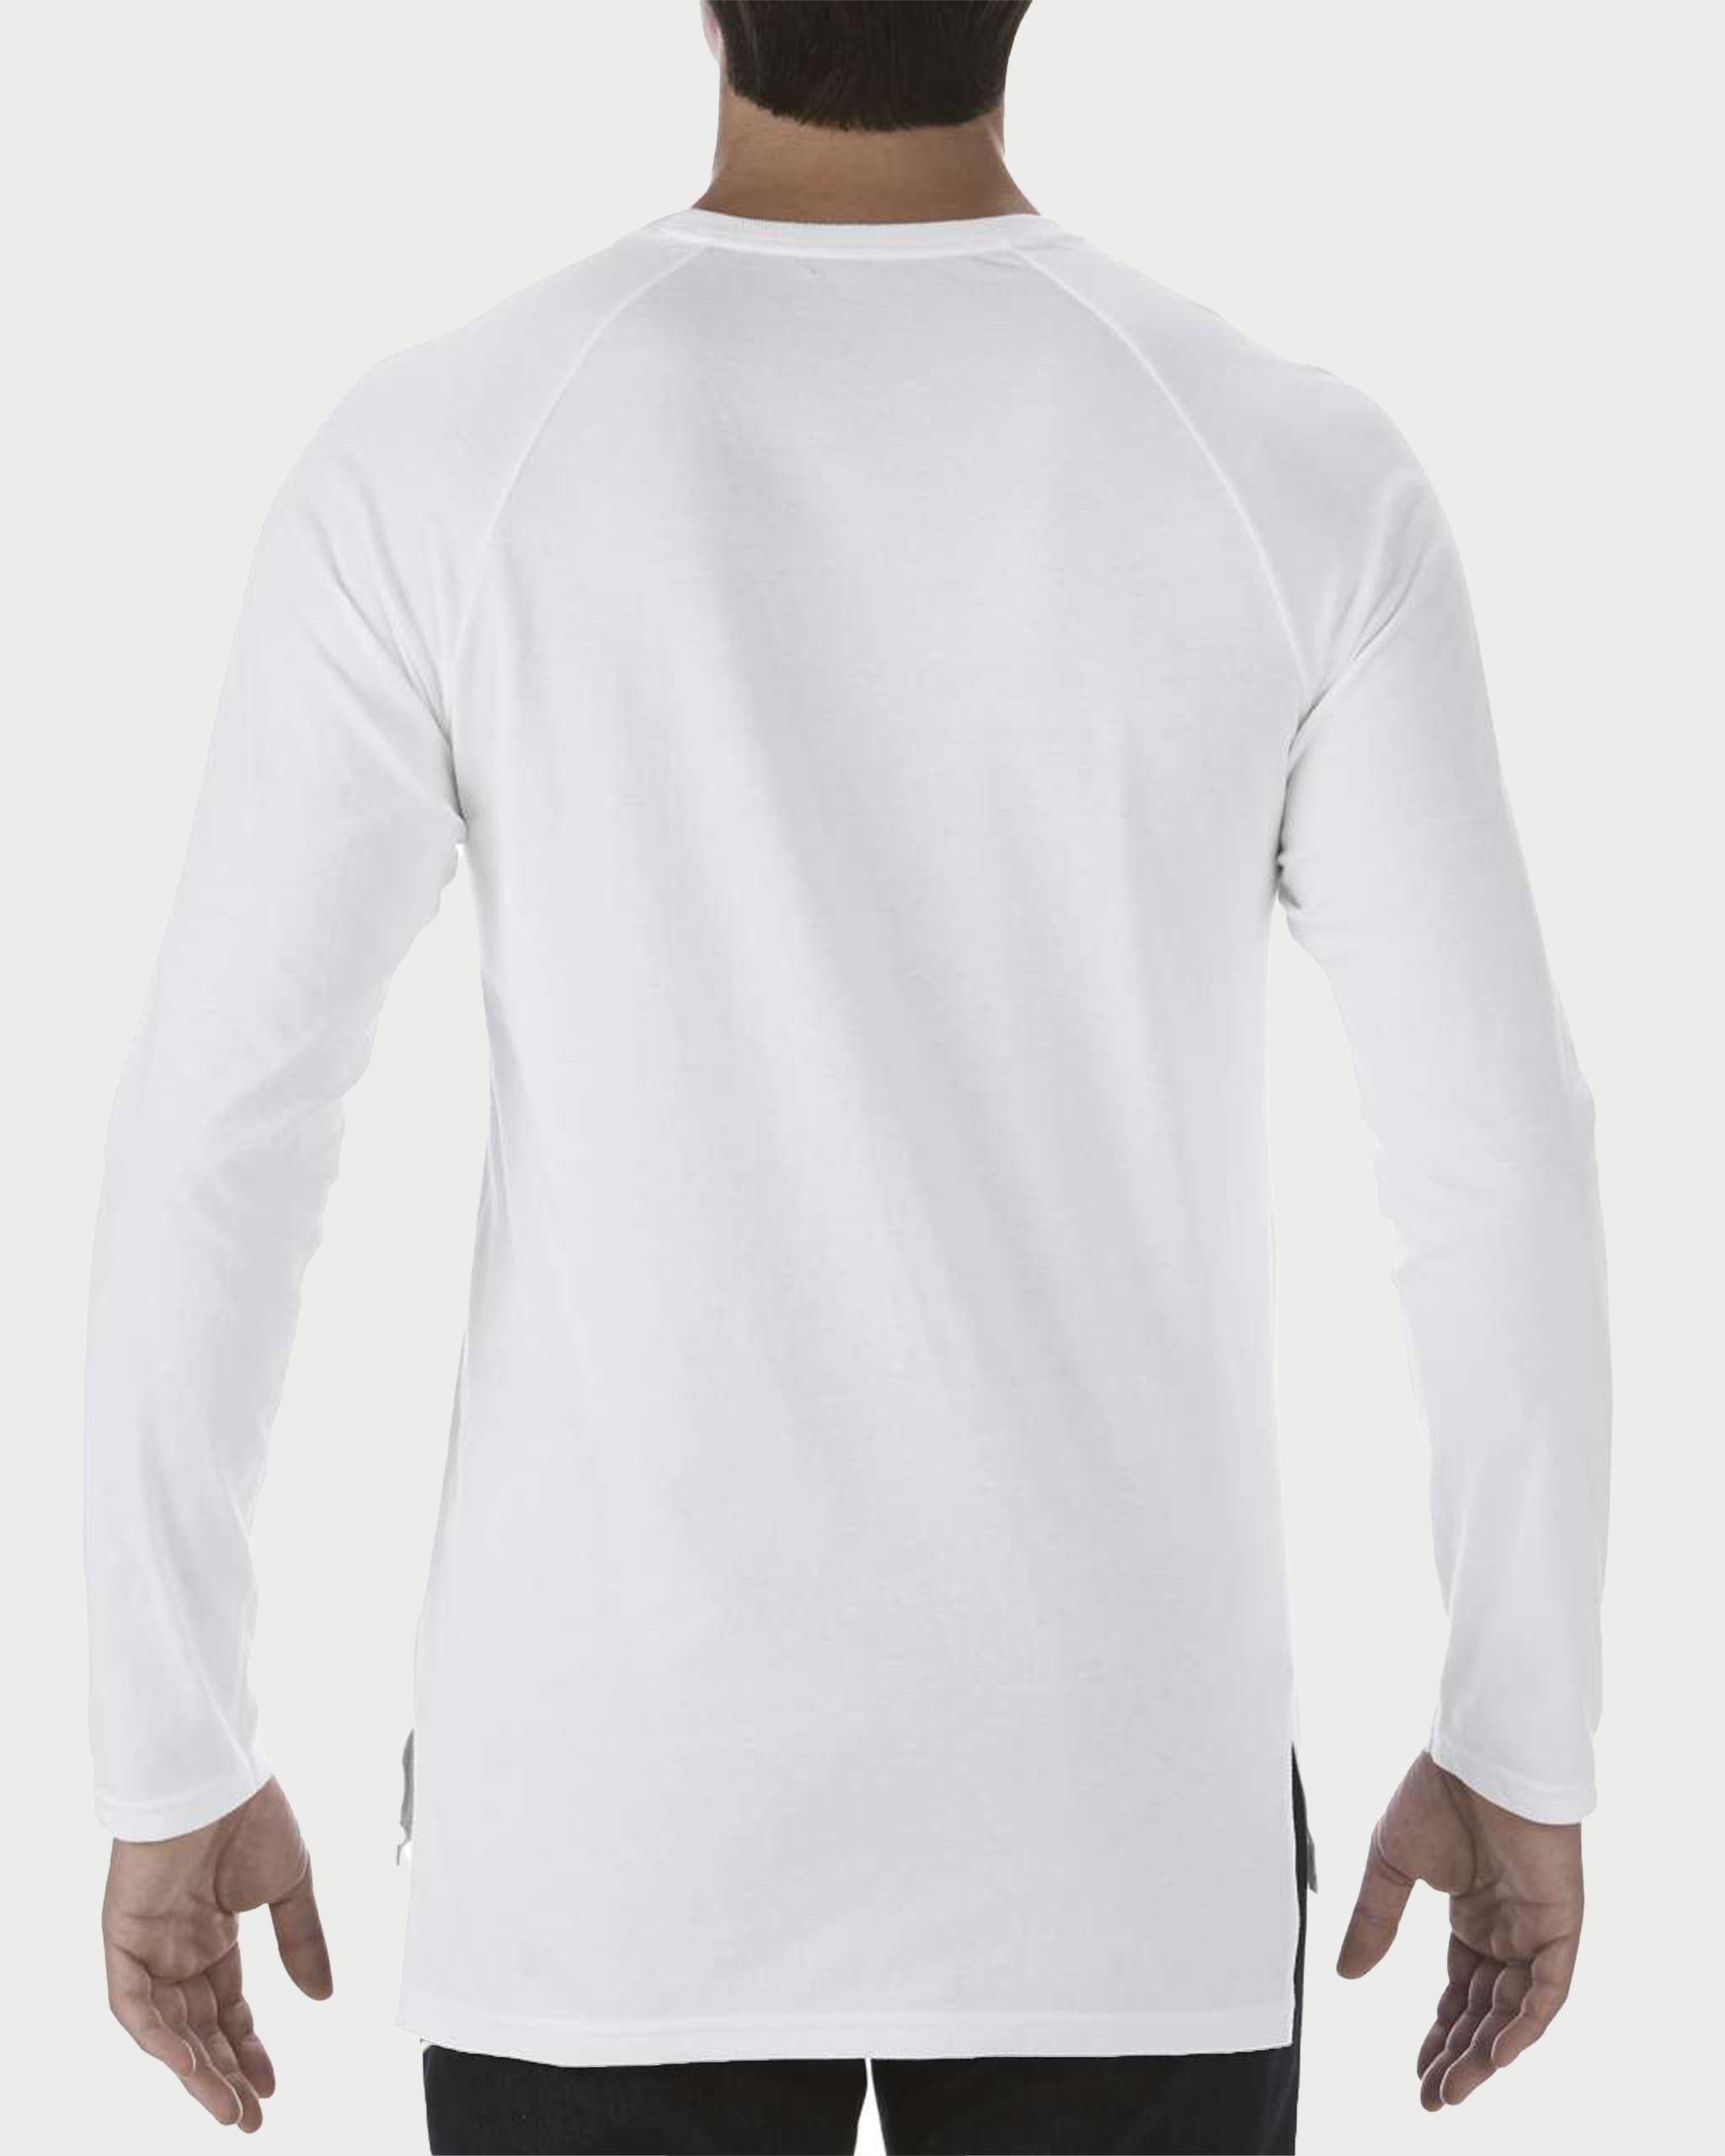 WHITE VISION - bluza barbateasca din bumbac premium